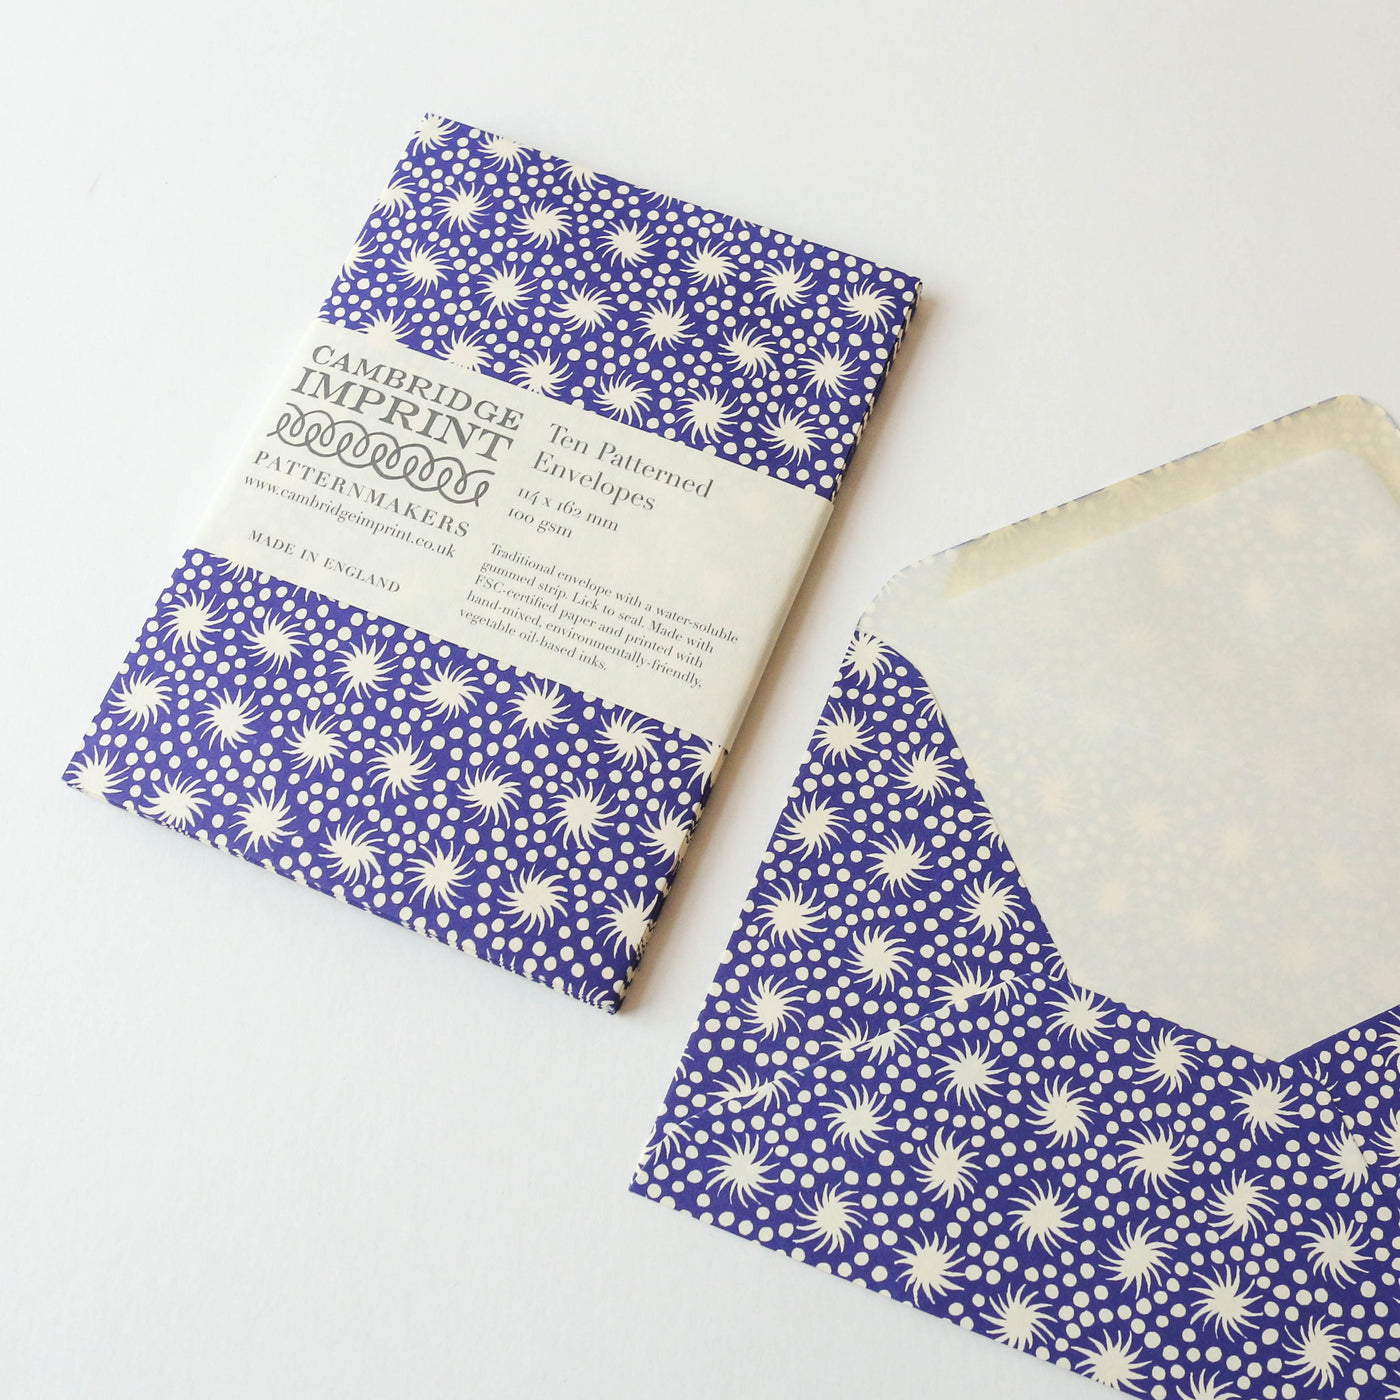 10 Cambridge Imprint Patterned Envelopes